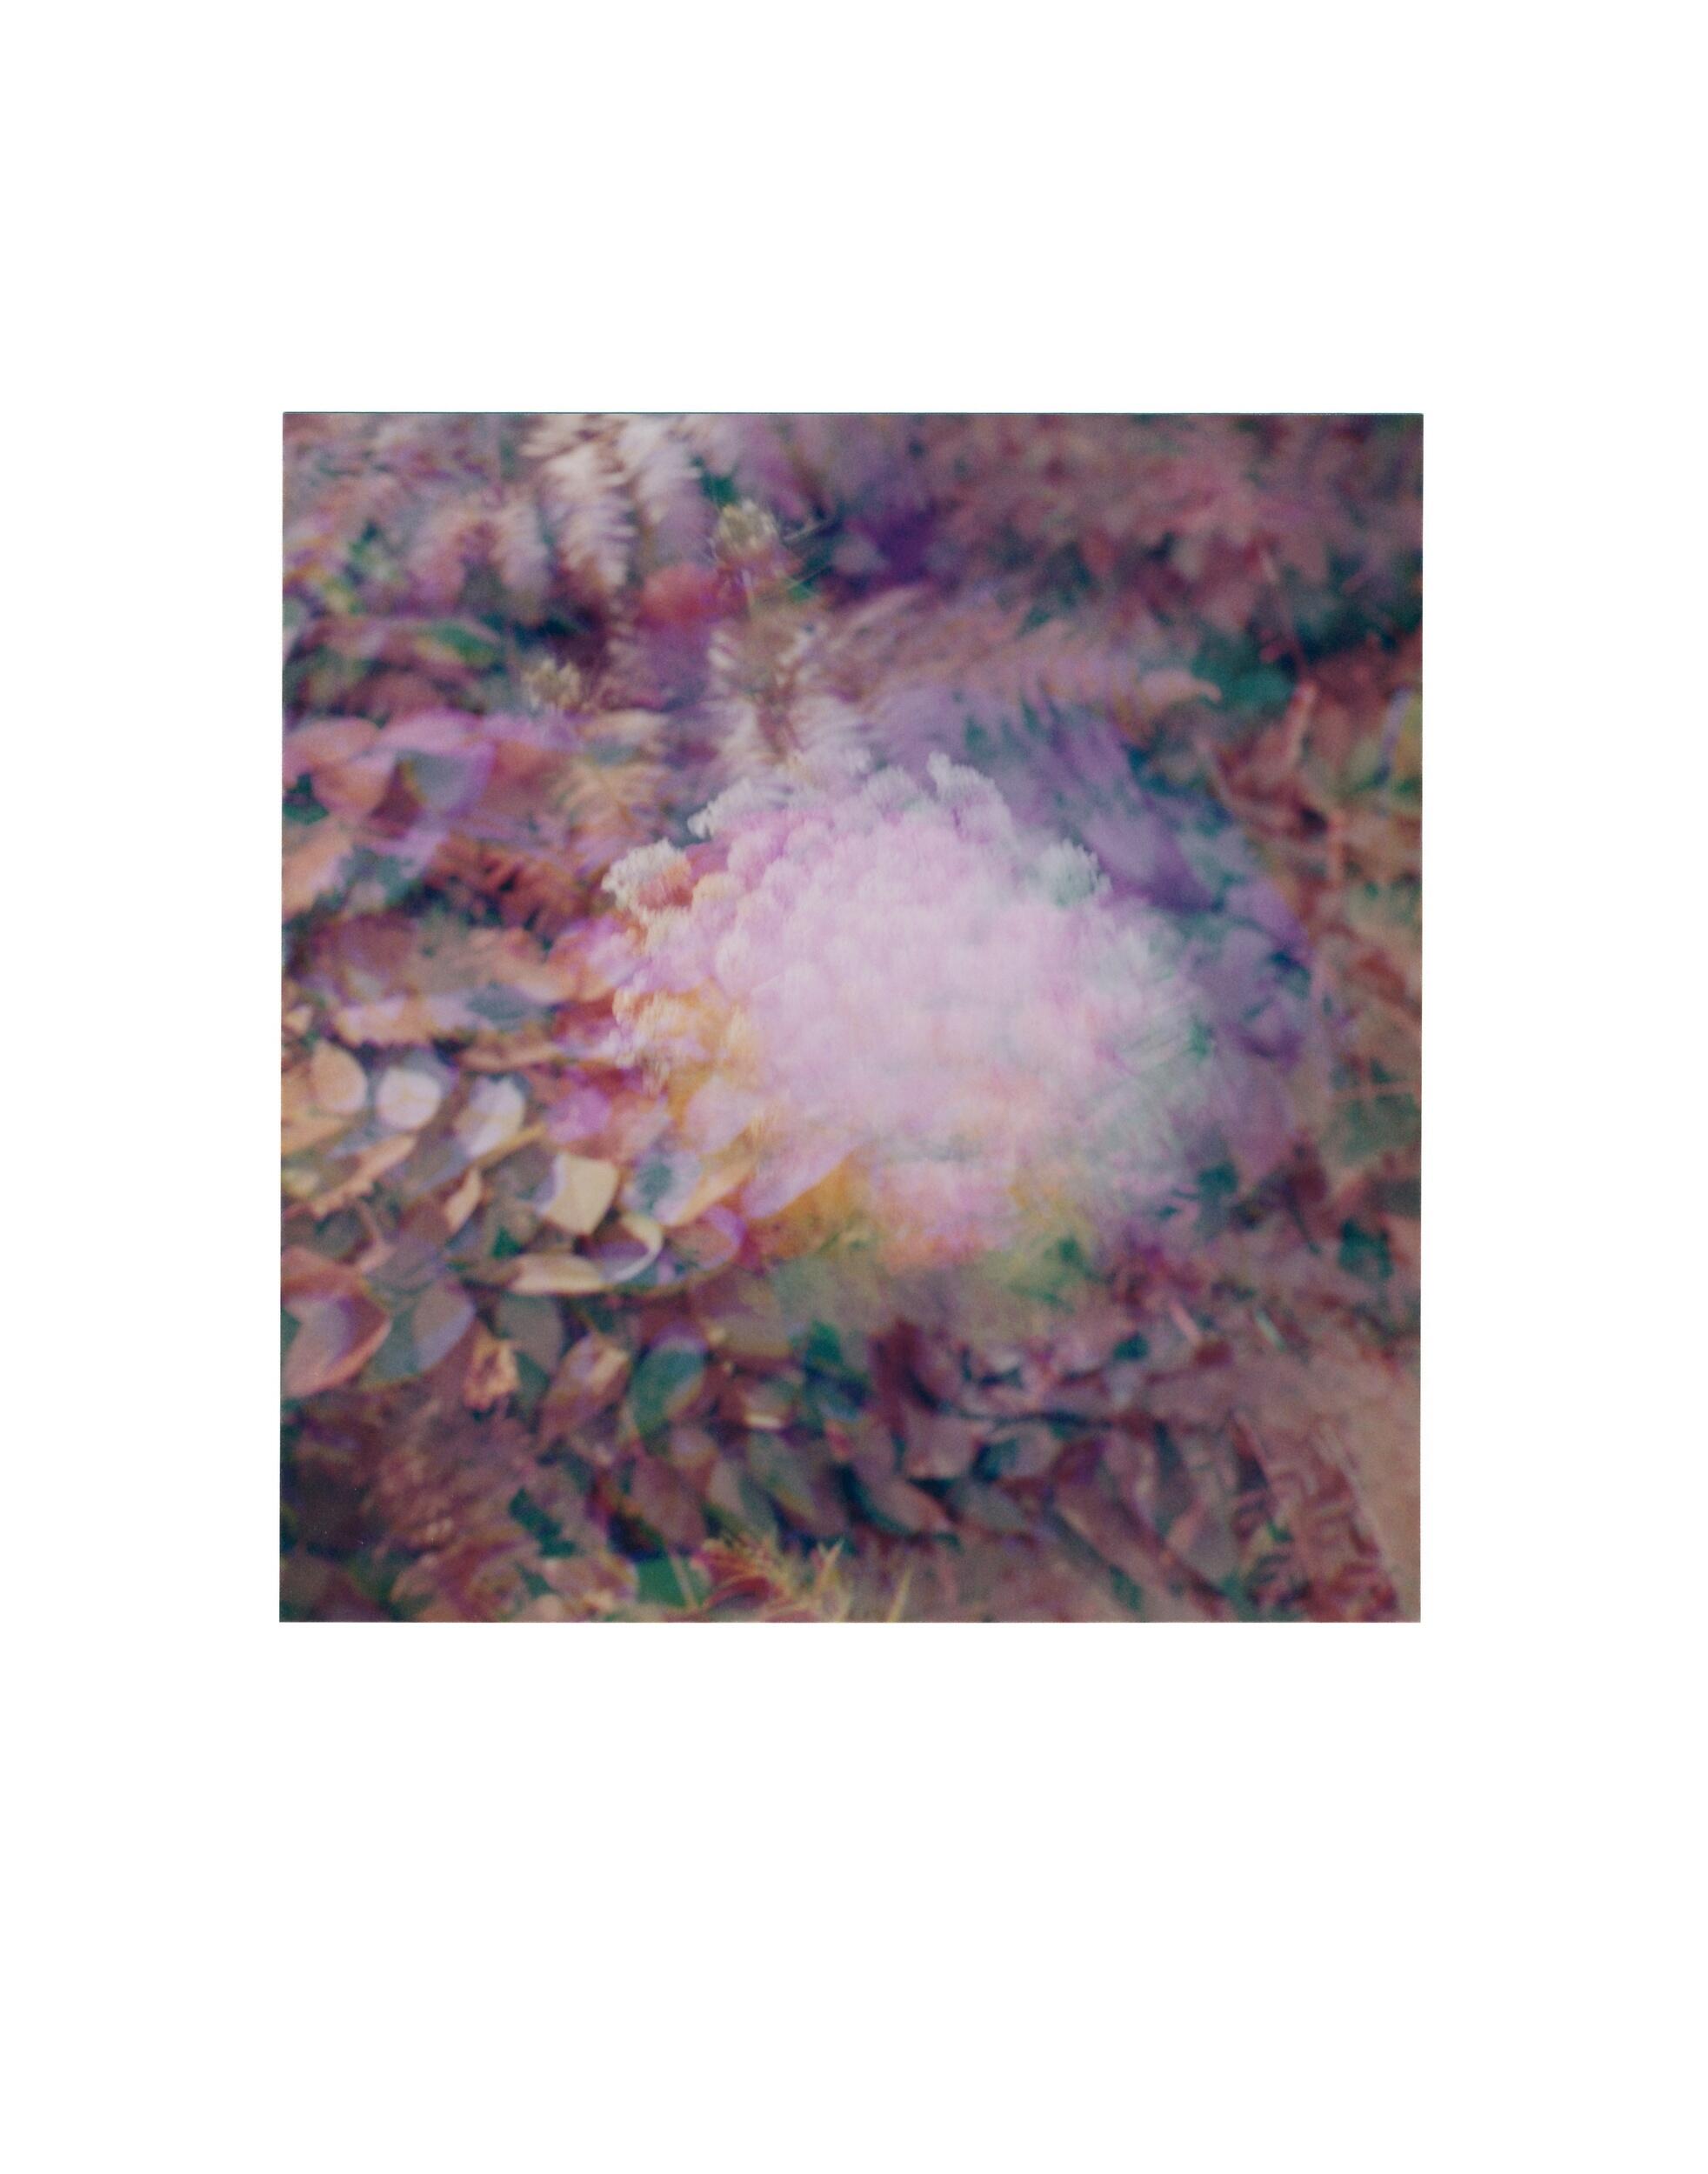 A blurry multicolored image 